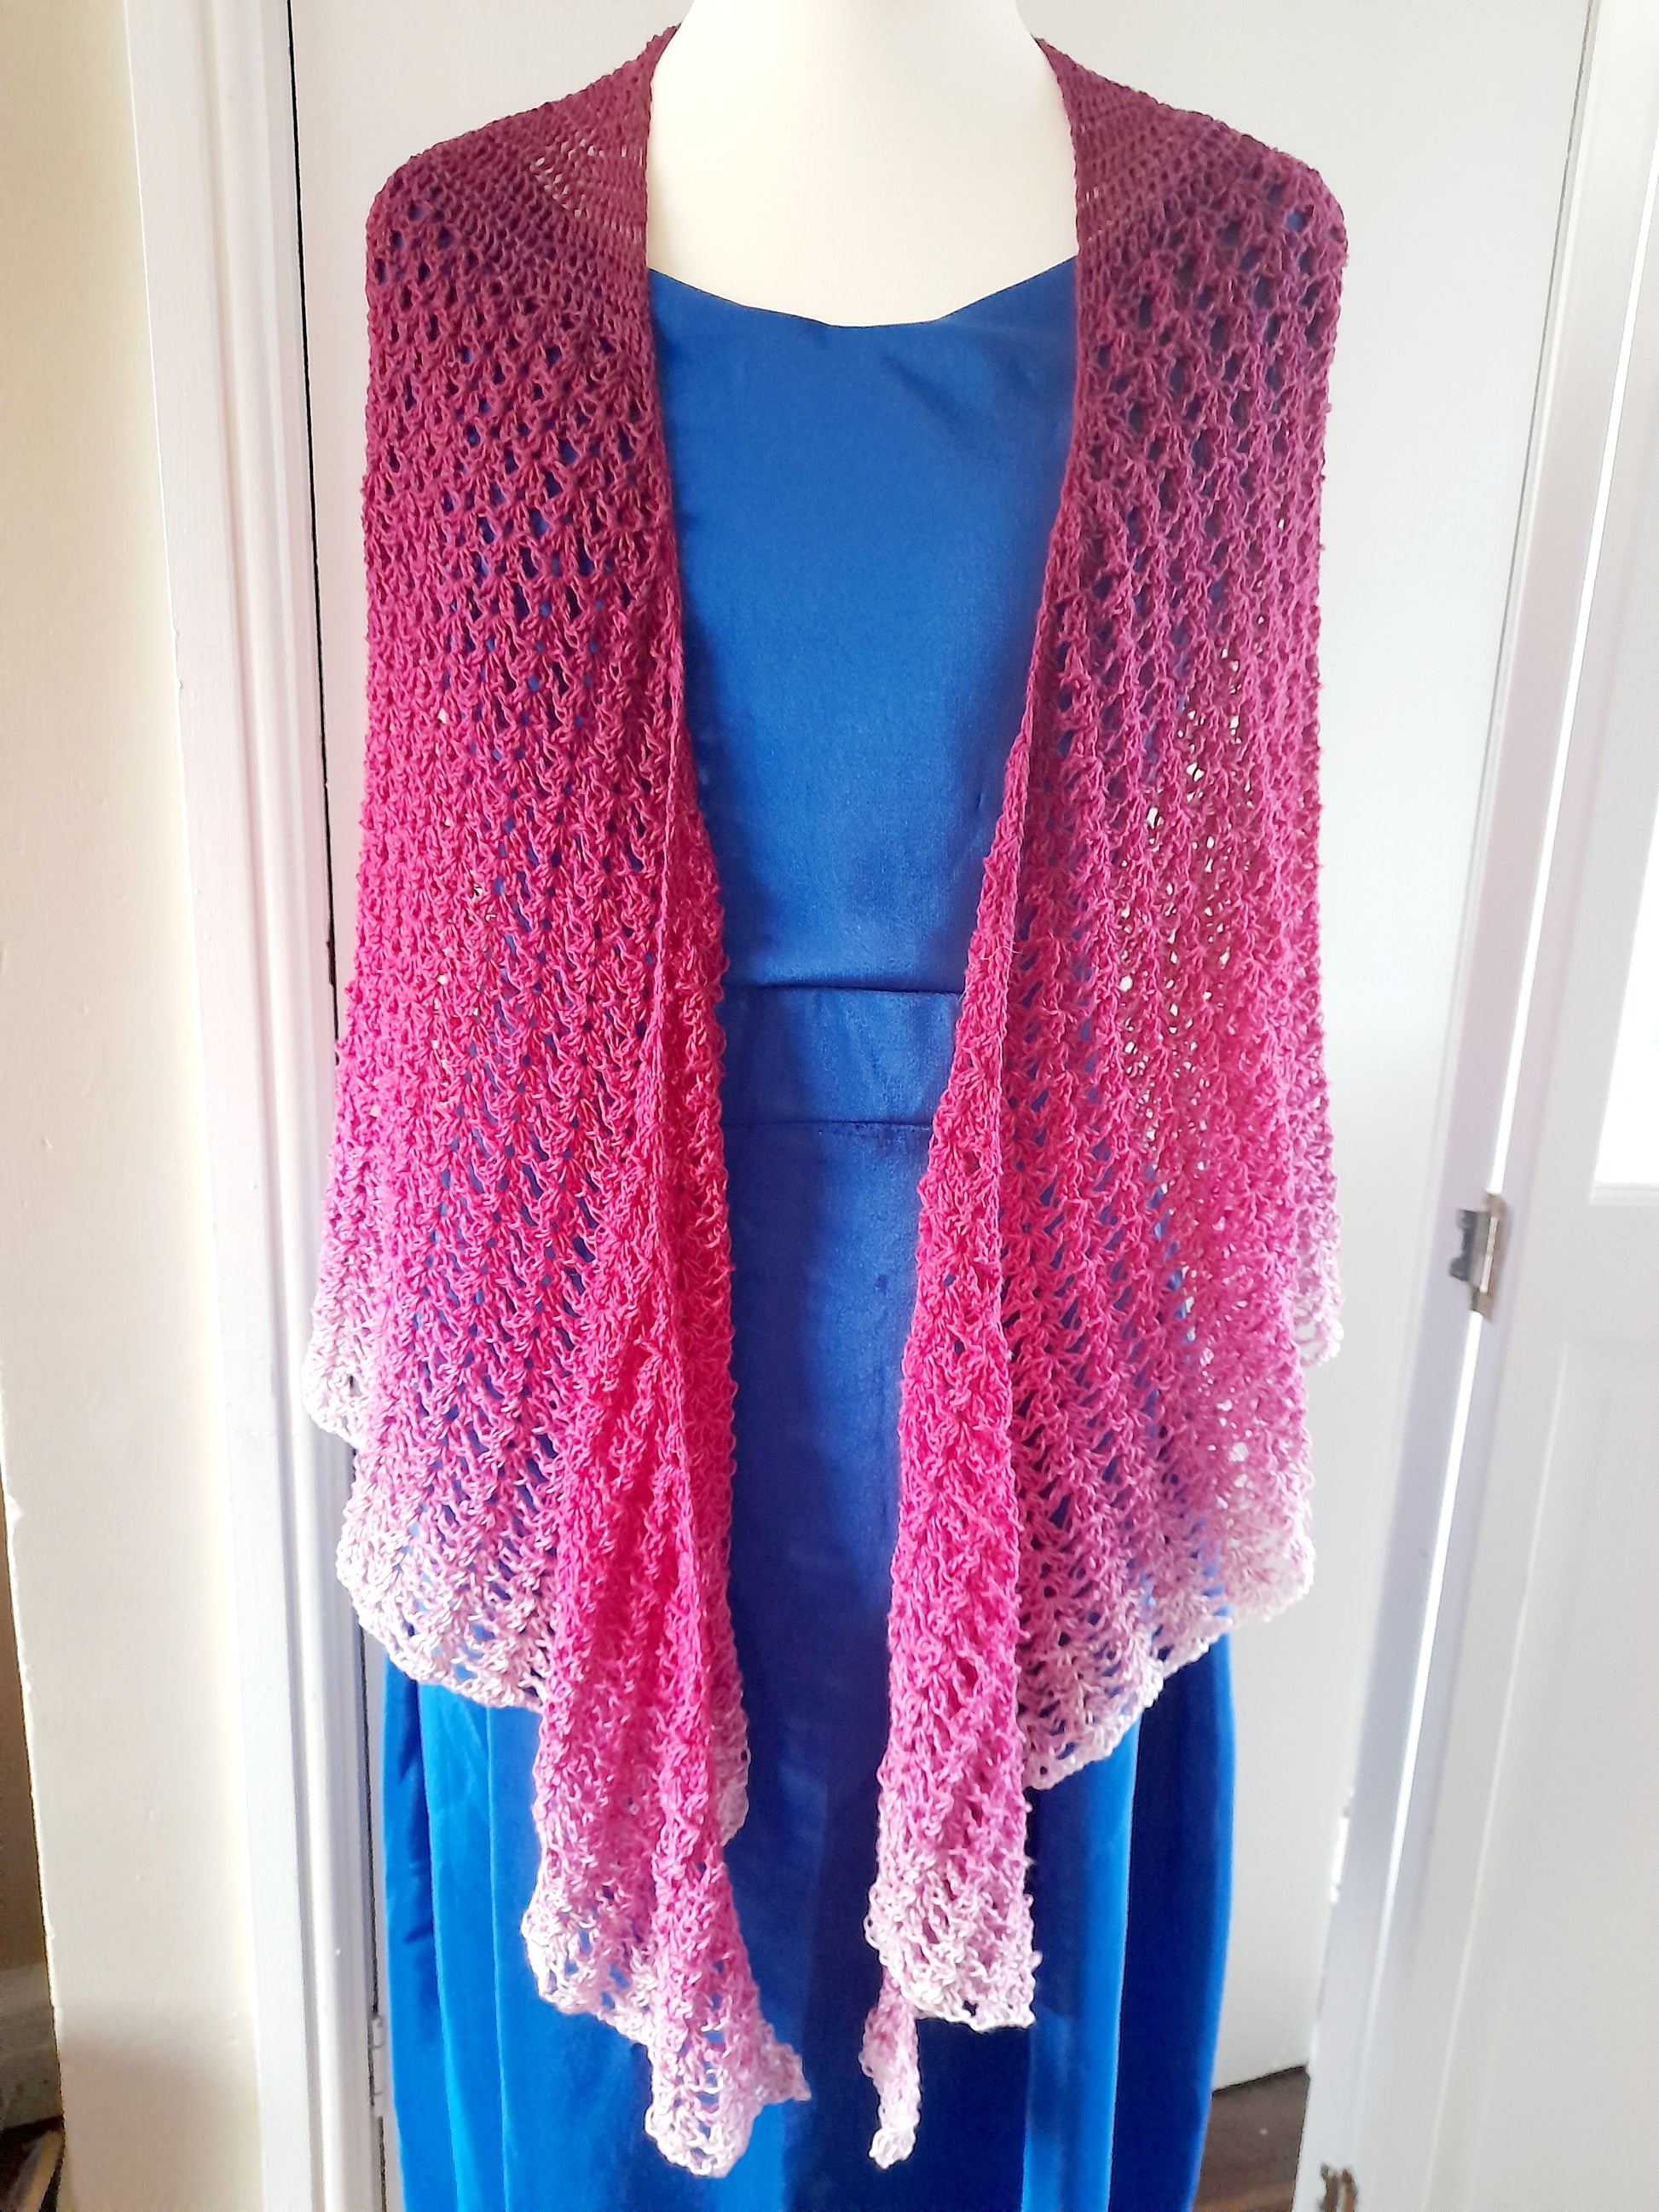 Scheepjes whirl forbidden fuchsia. Lace crochet shawl pattern. 